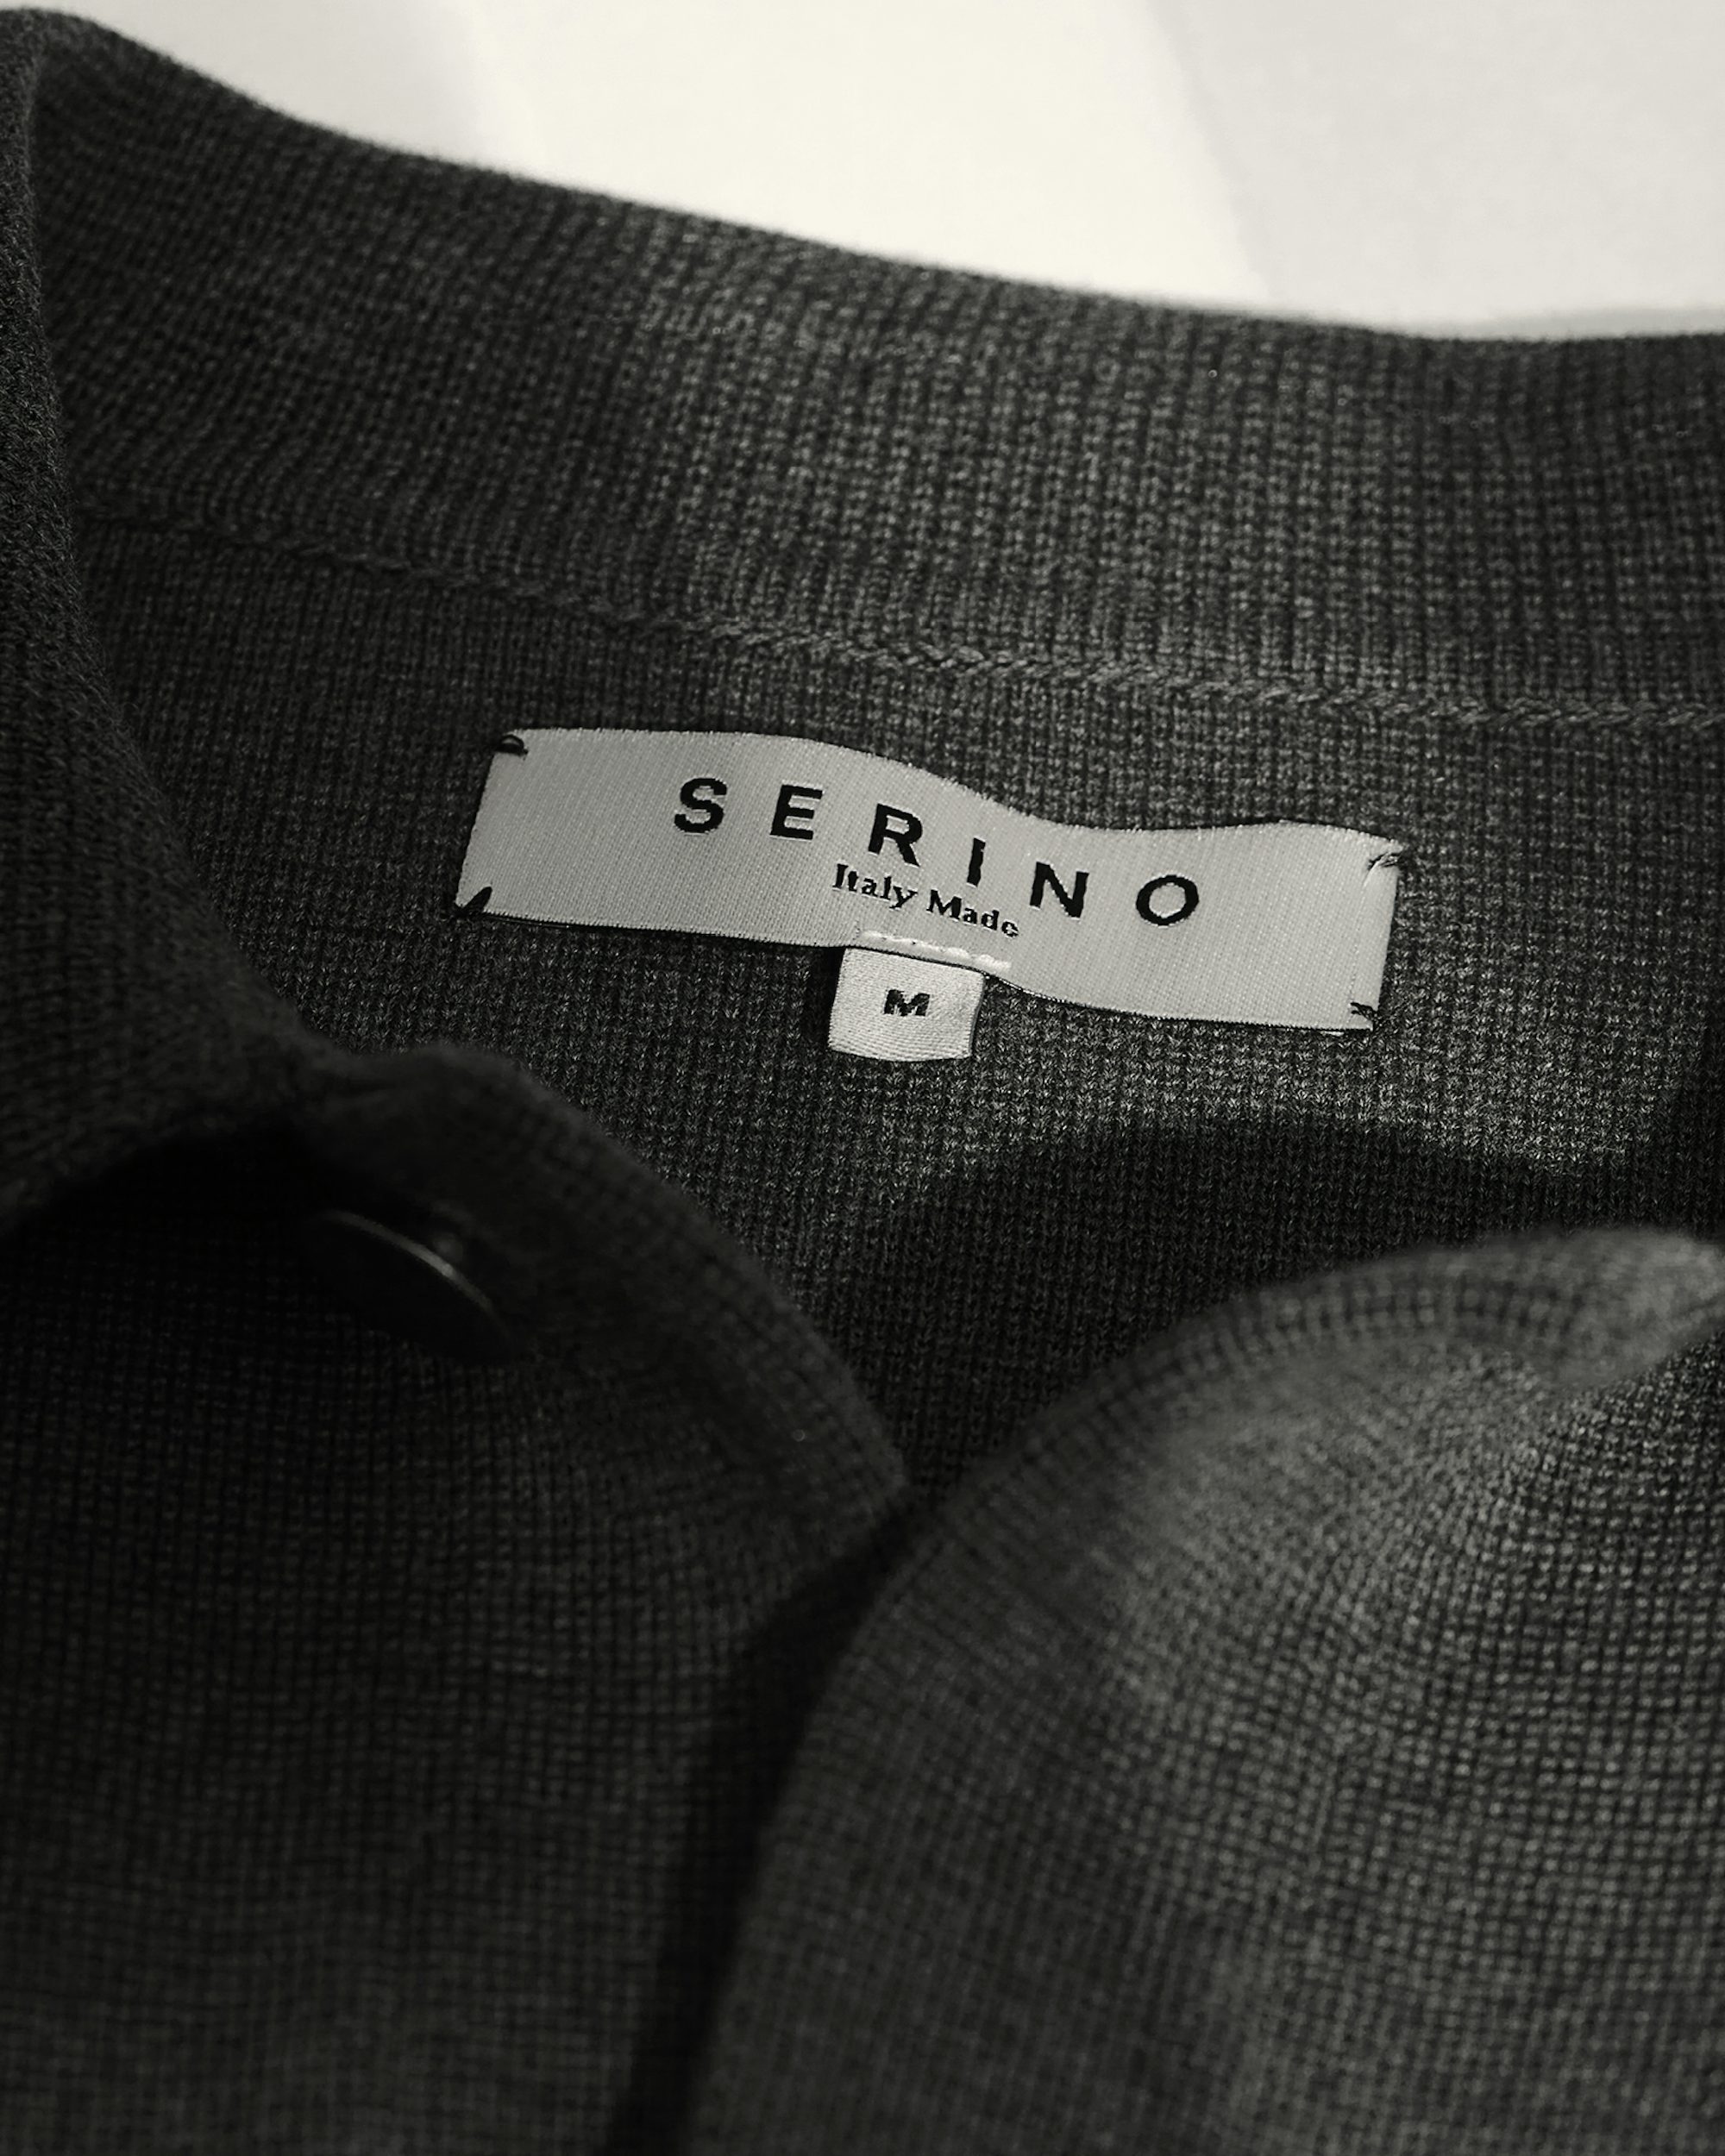 Serino Studio - Apparel Design